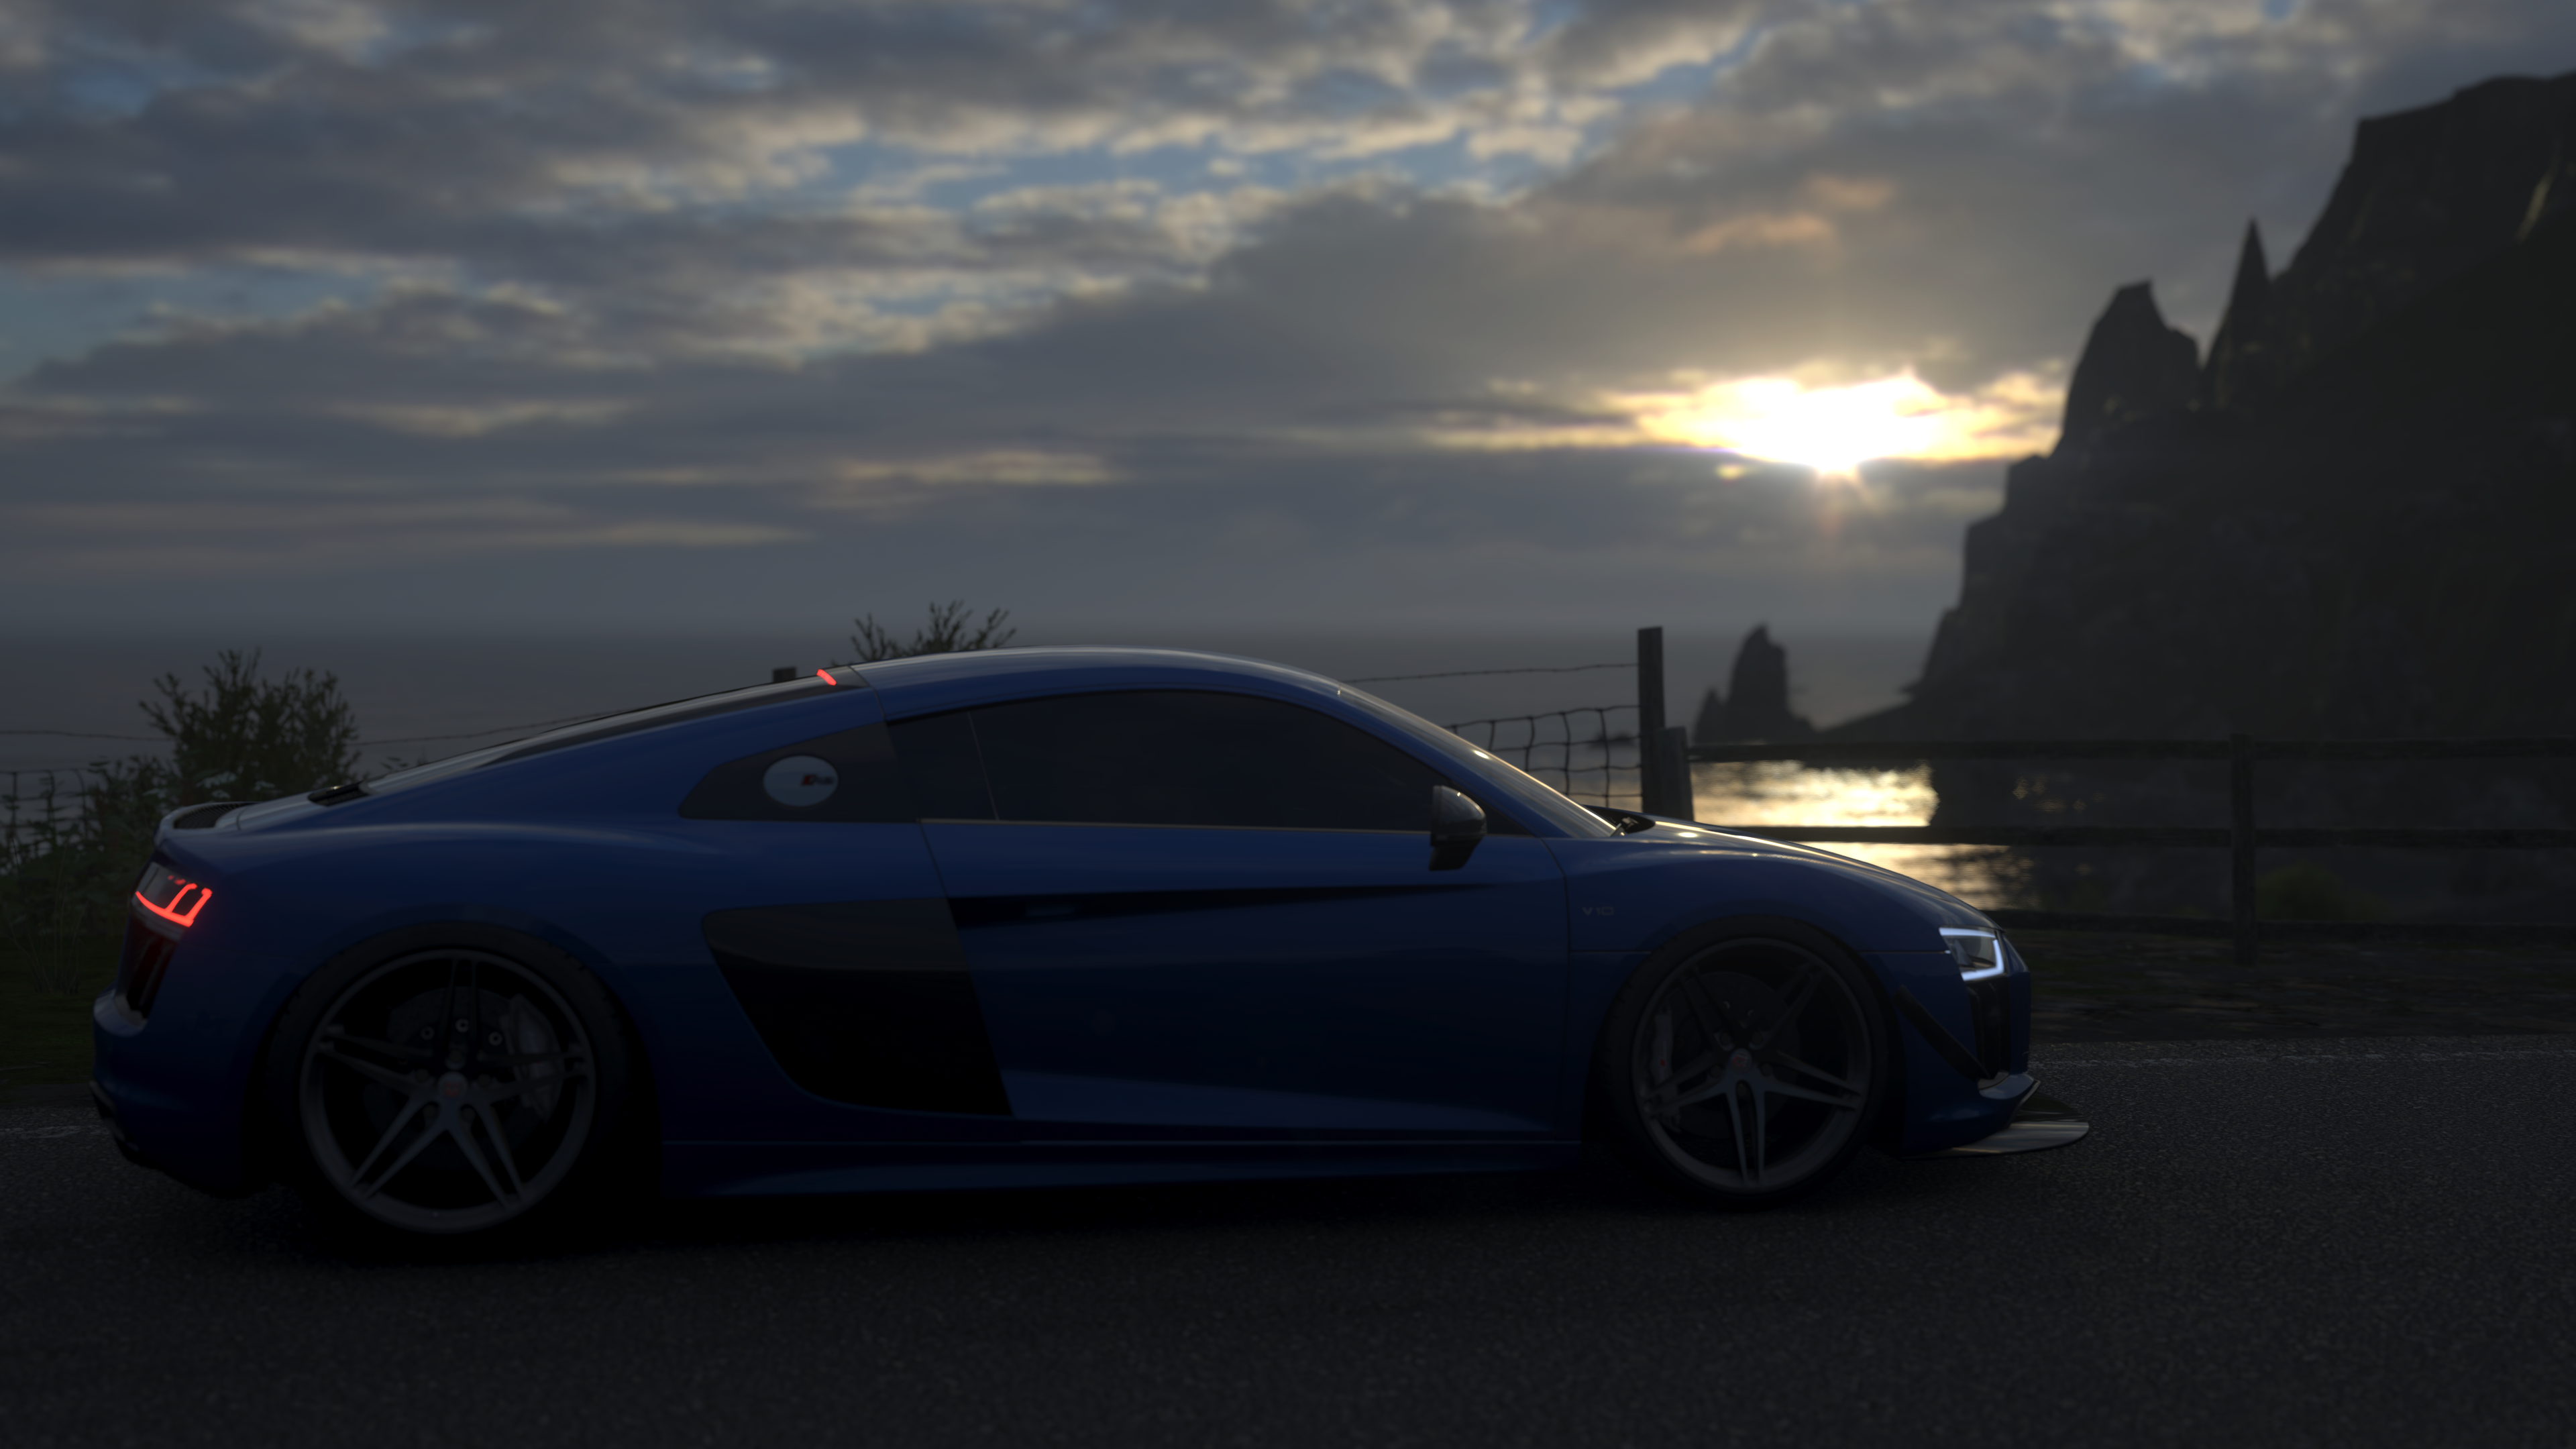 General 3840x2160 Forza Forza Horizon 4 video games car screen shot Audi R8 Audi side view vehicle blue cars